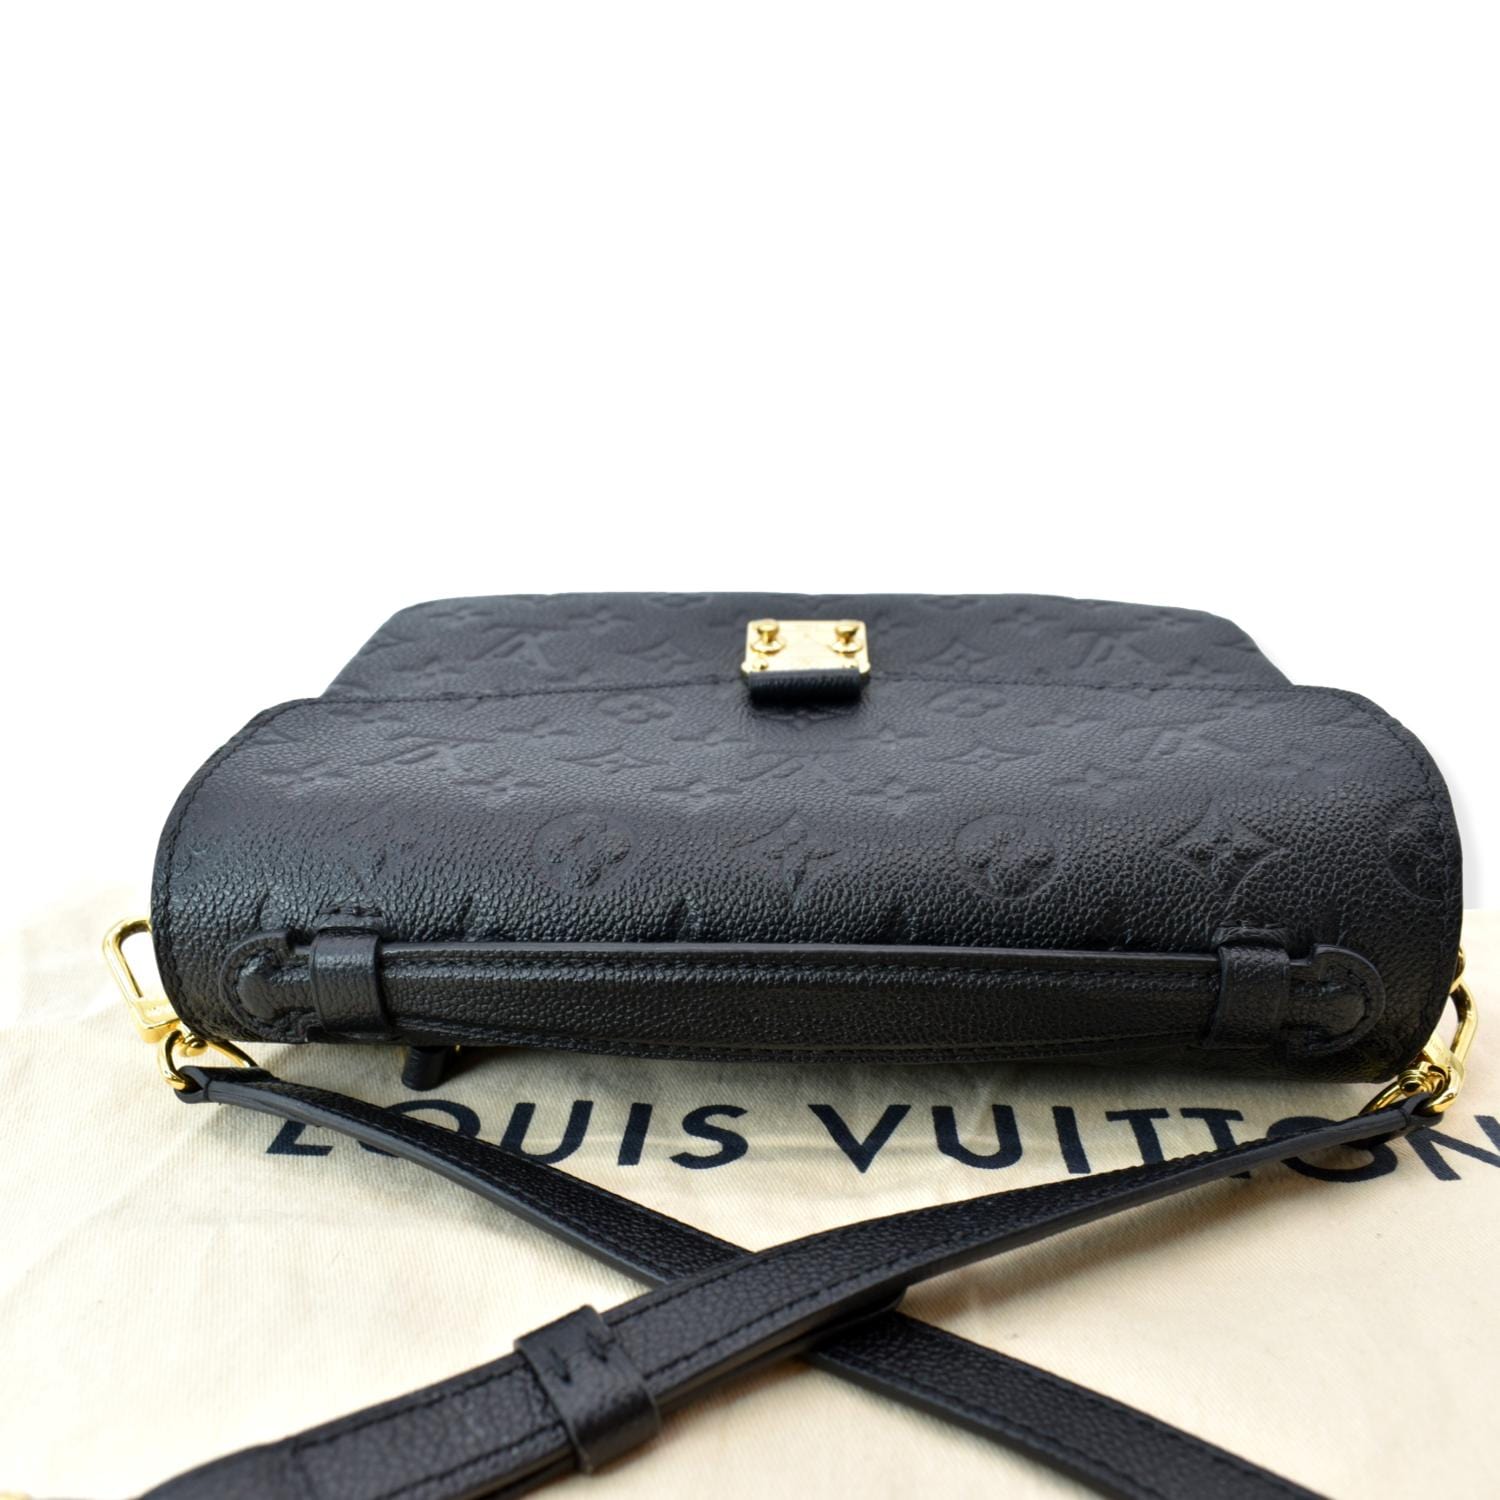 ABDLOUISVUITTON POCHETTE METIS Black Shoulder Bags Women  Messenger Bags Handbags Tote Satchel Purse C2GHG From Wangtao8888, $28.65